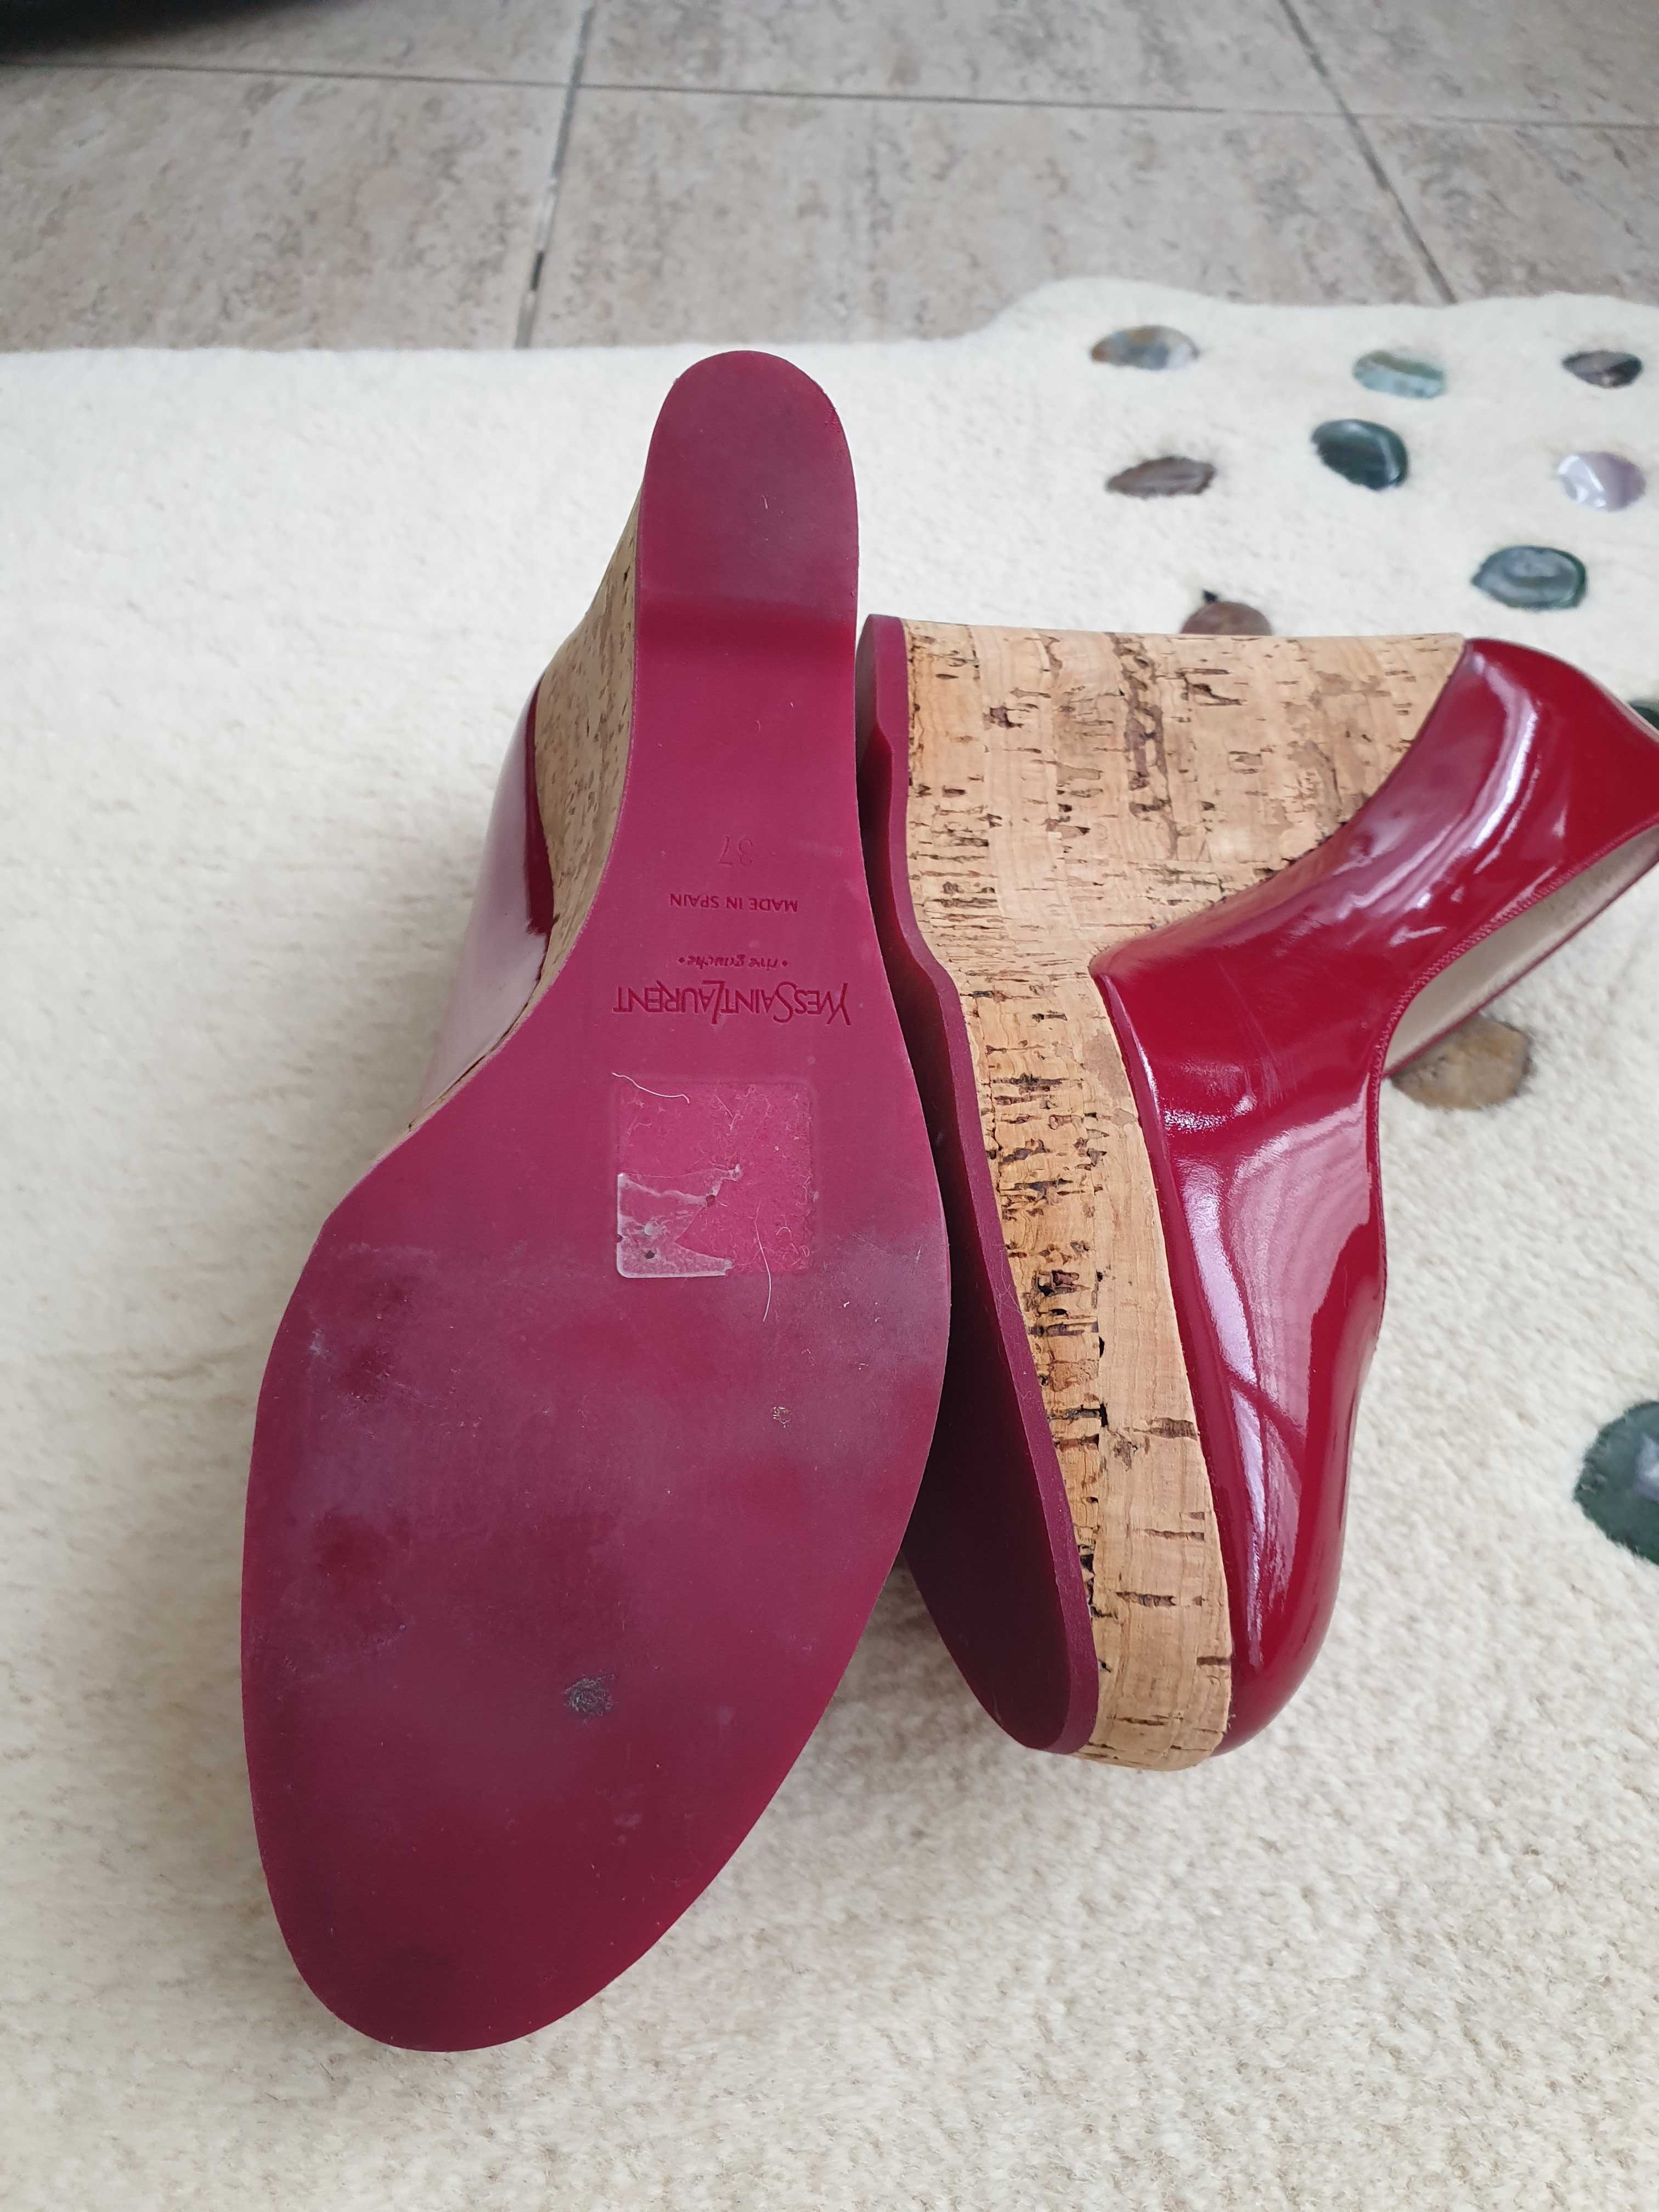 YSL pantofi rosii, talpa otopedica din plută naturala